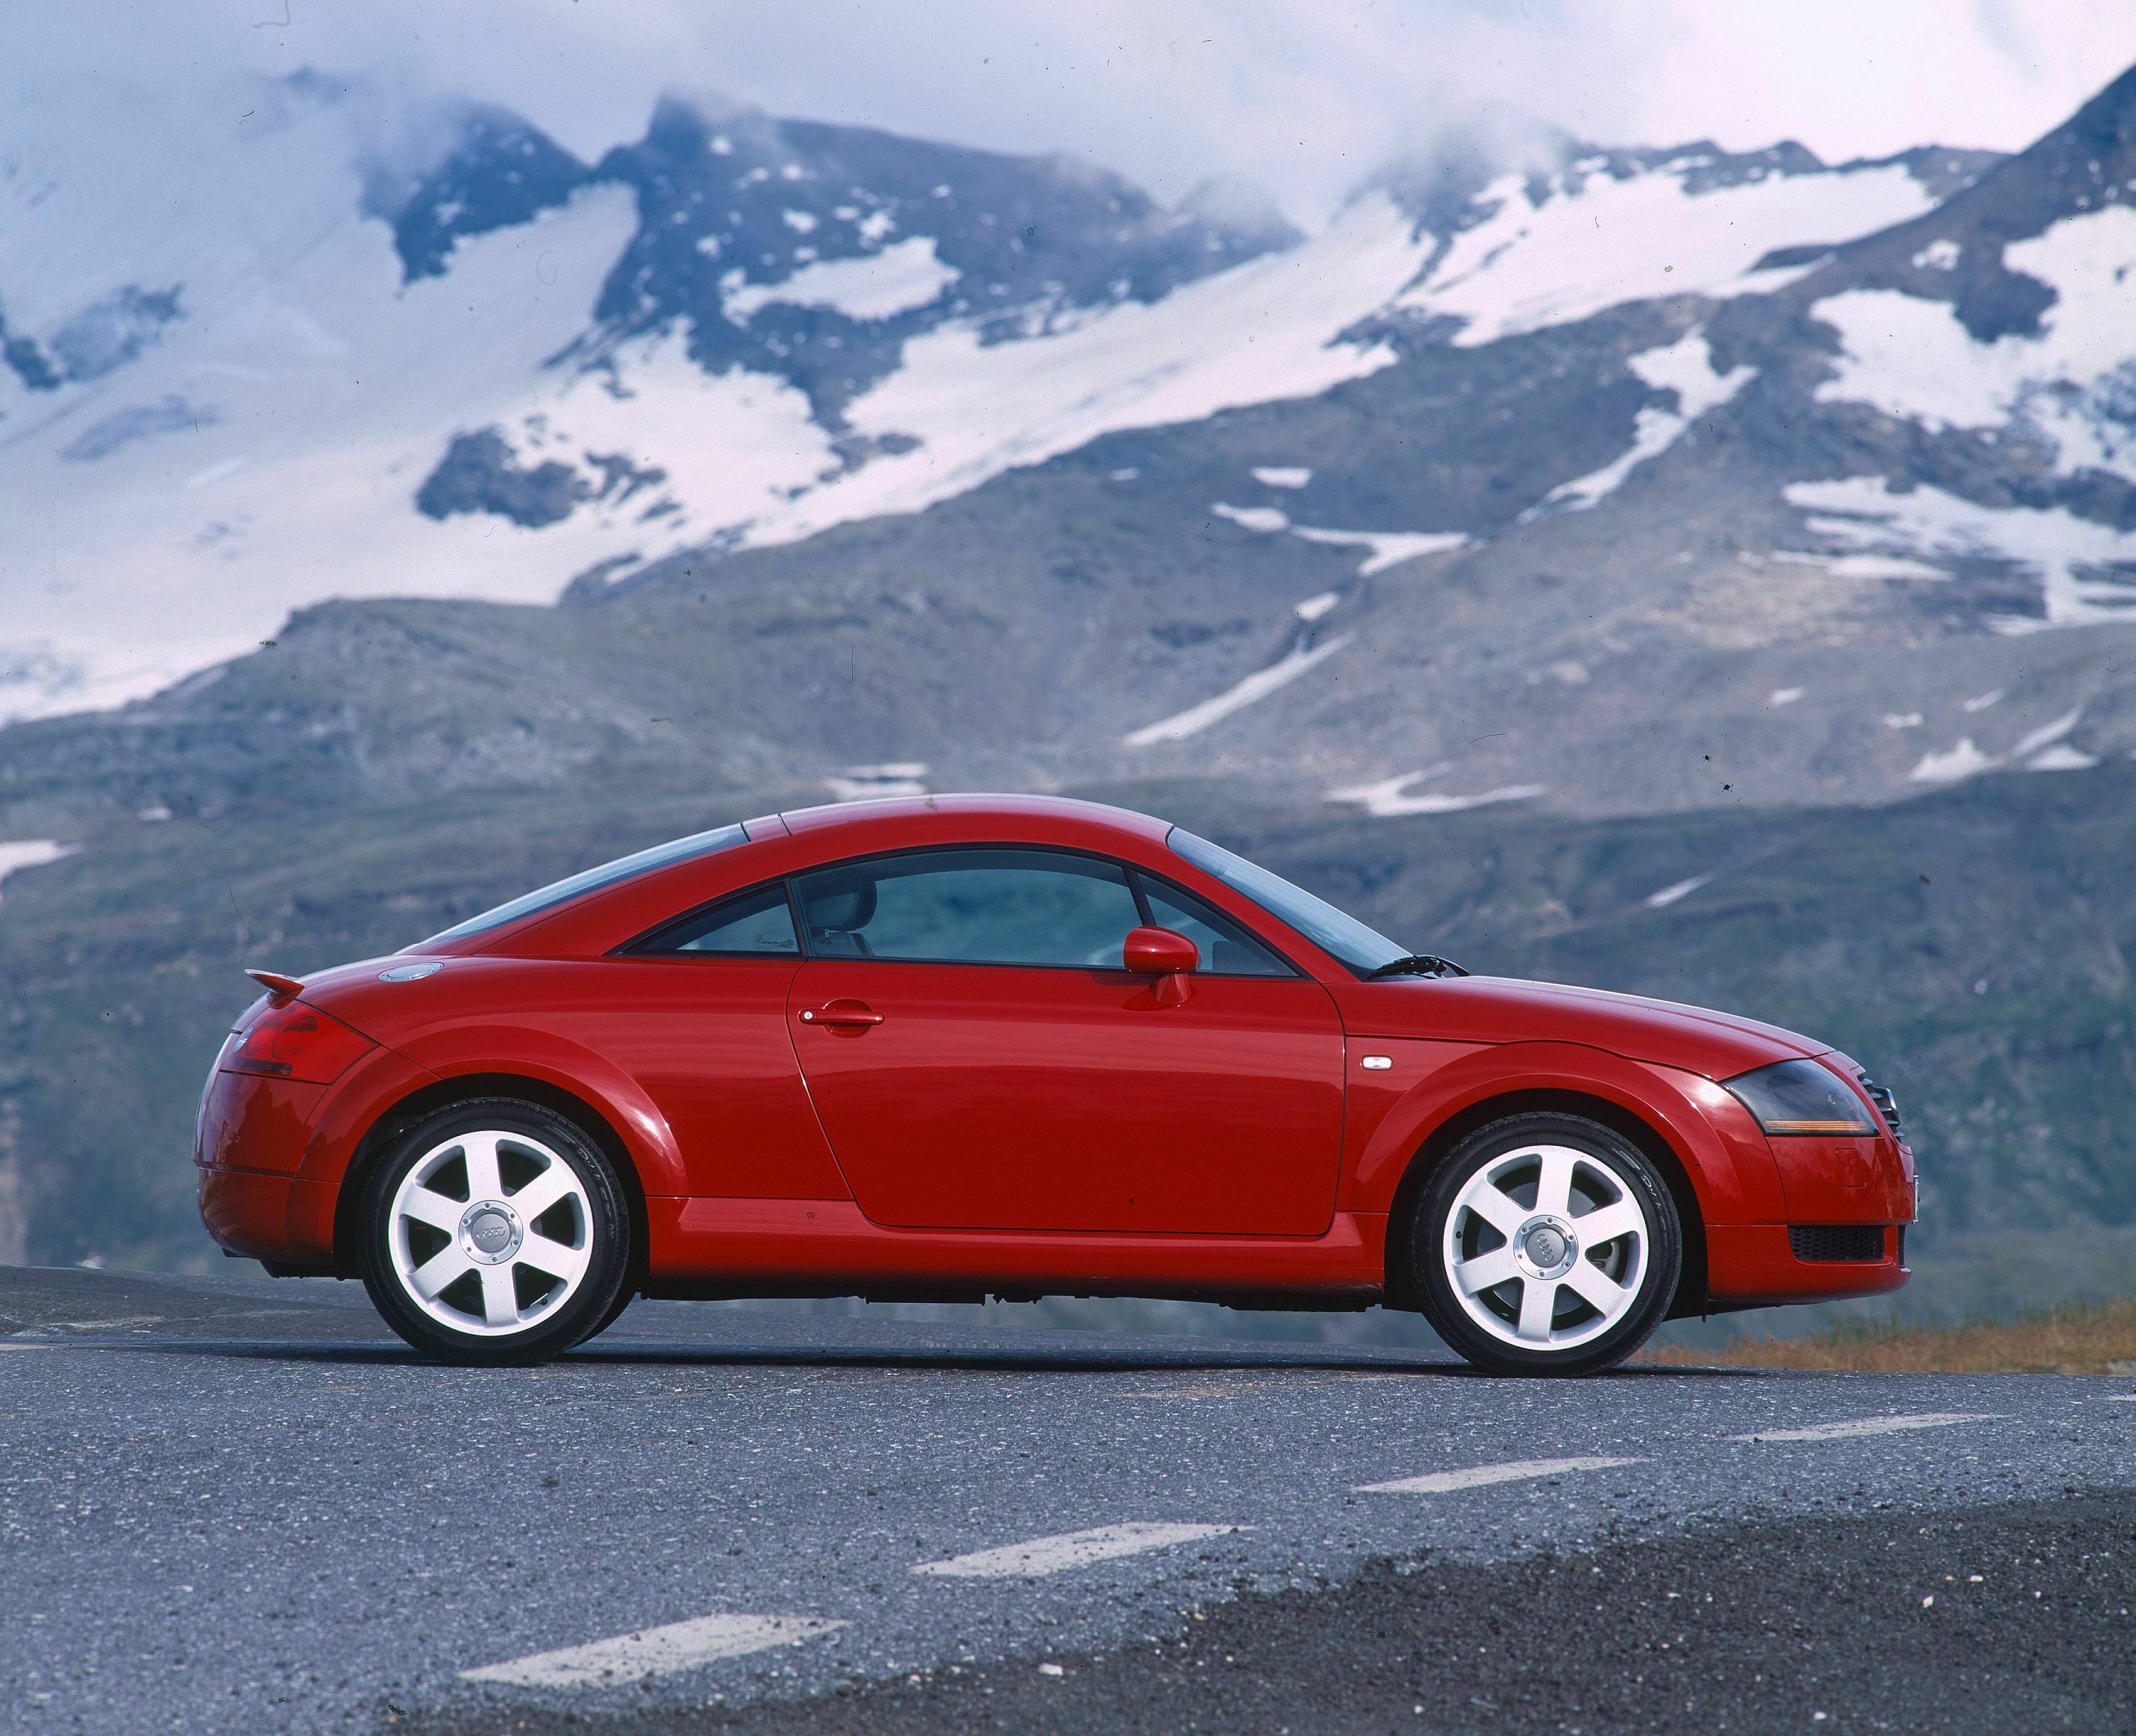 A timeless design icon: The Audi TT turns 25 - Audi Newsroom